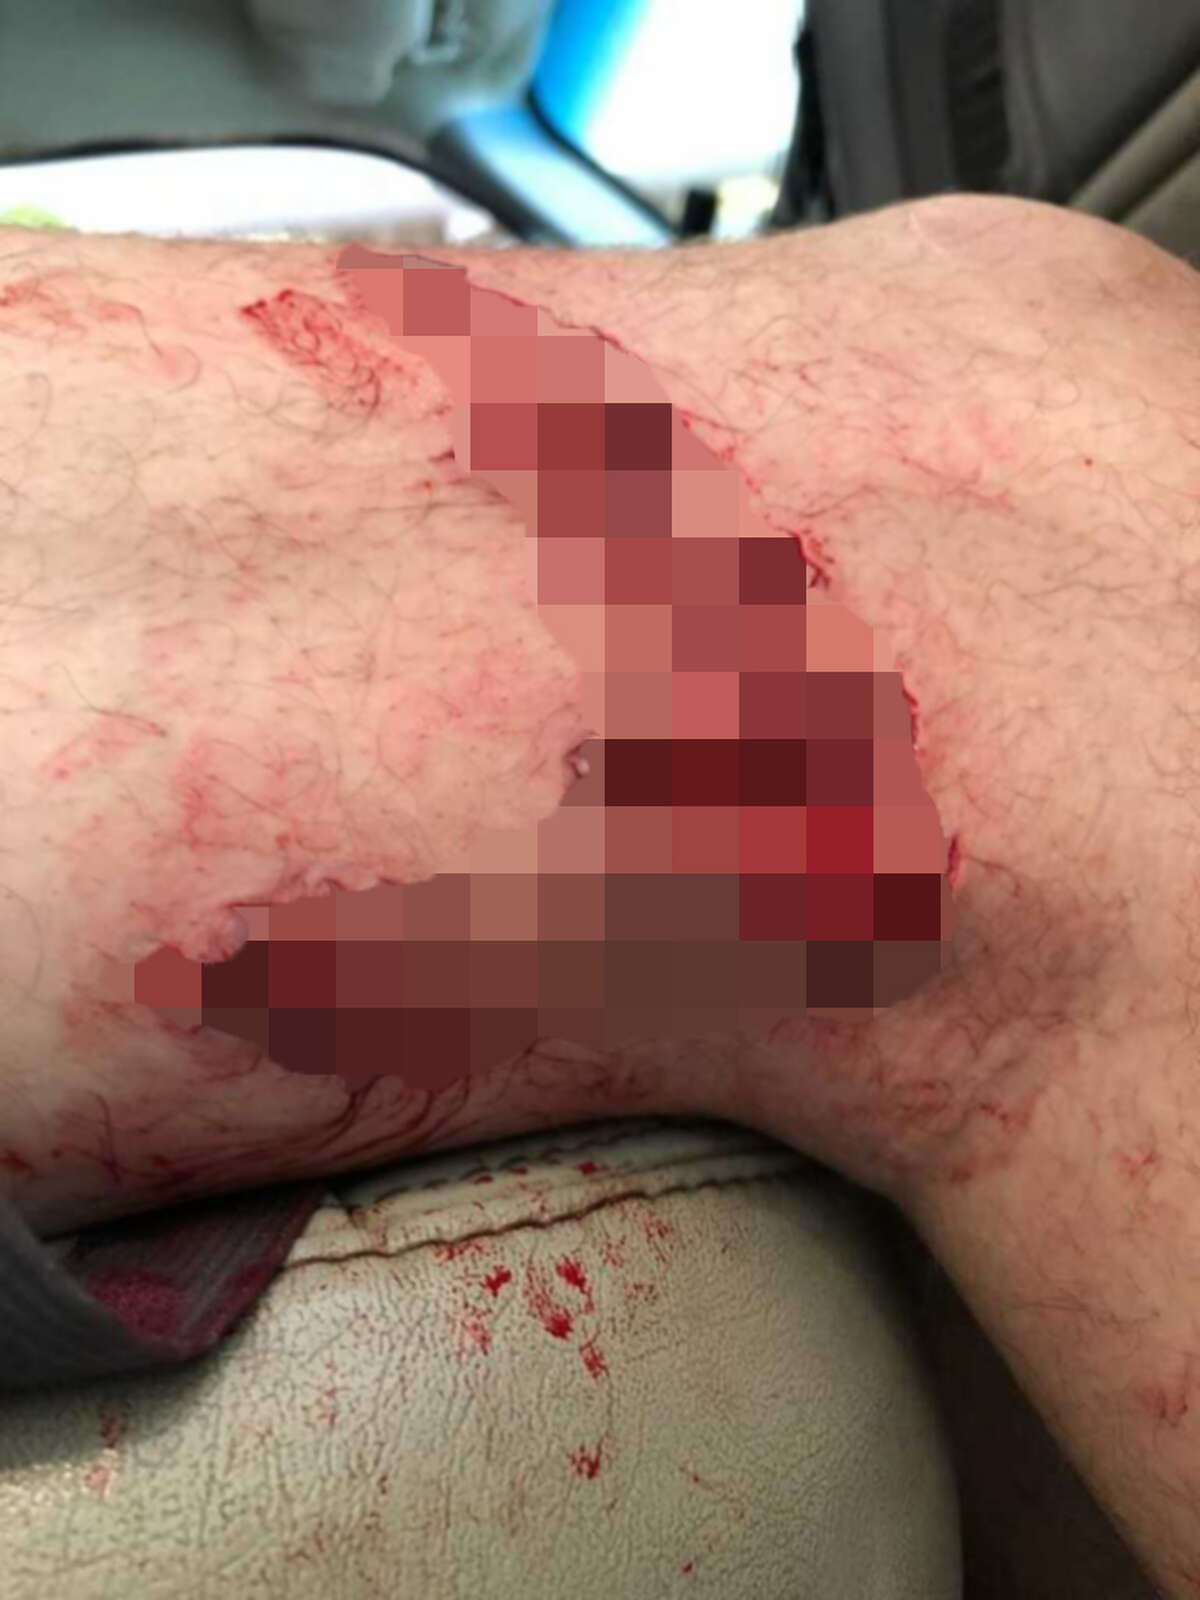 A 42-year old man was bitten by a shark near Crystal Beach on Thursday, August 9, 2018. 